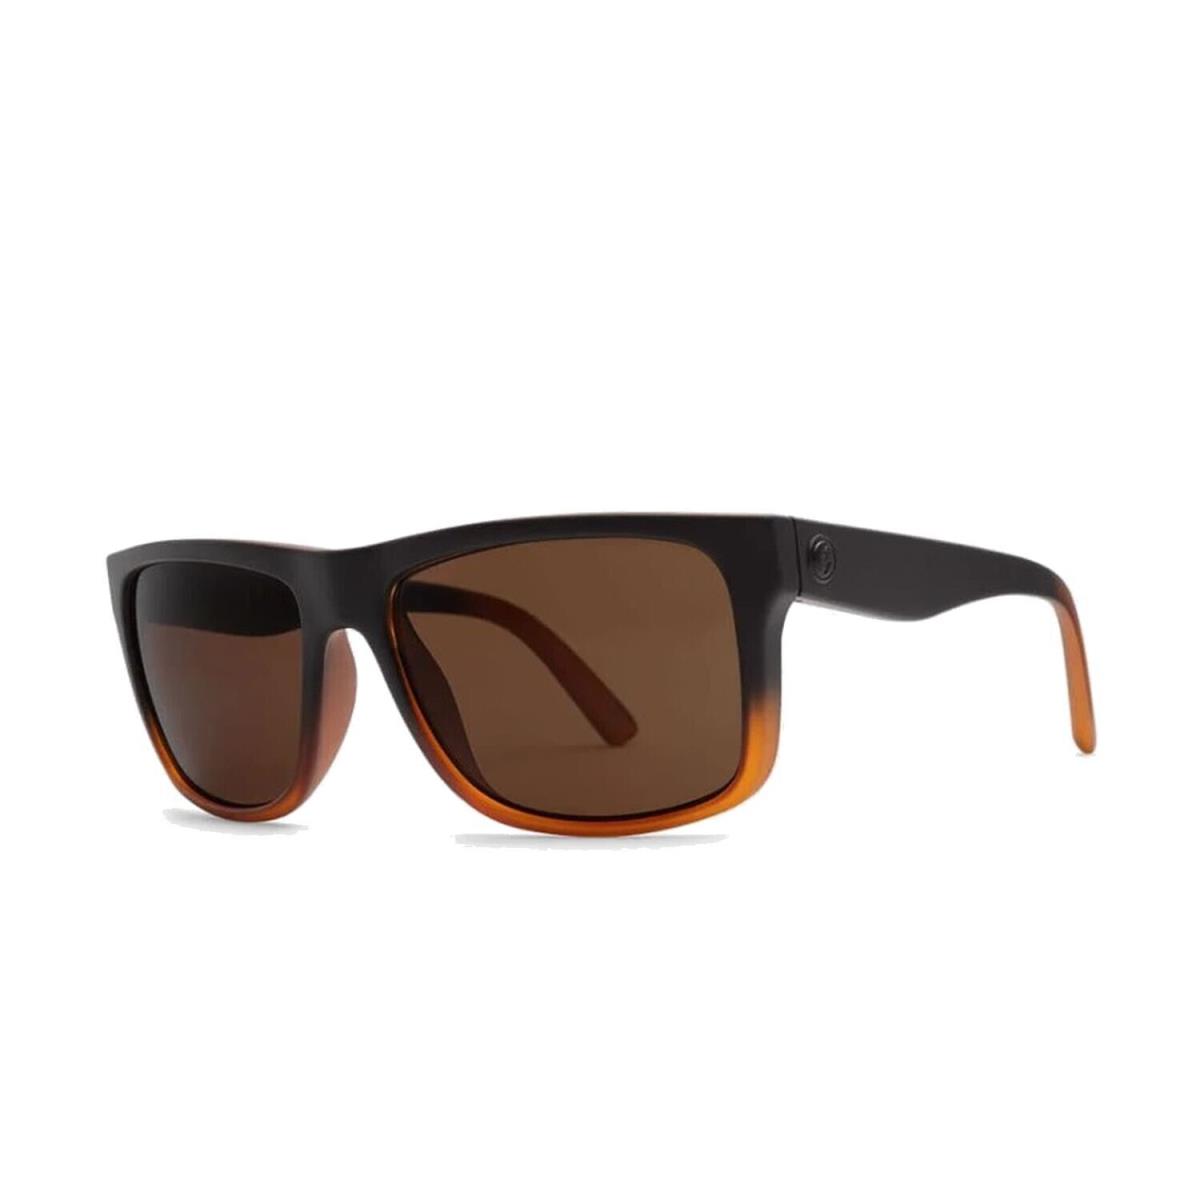 Electric Swingarm Sunglasses Black Amber with Bronze Polarized Lens